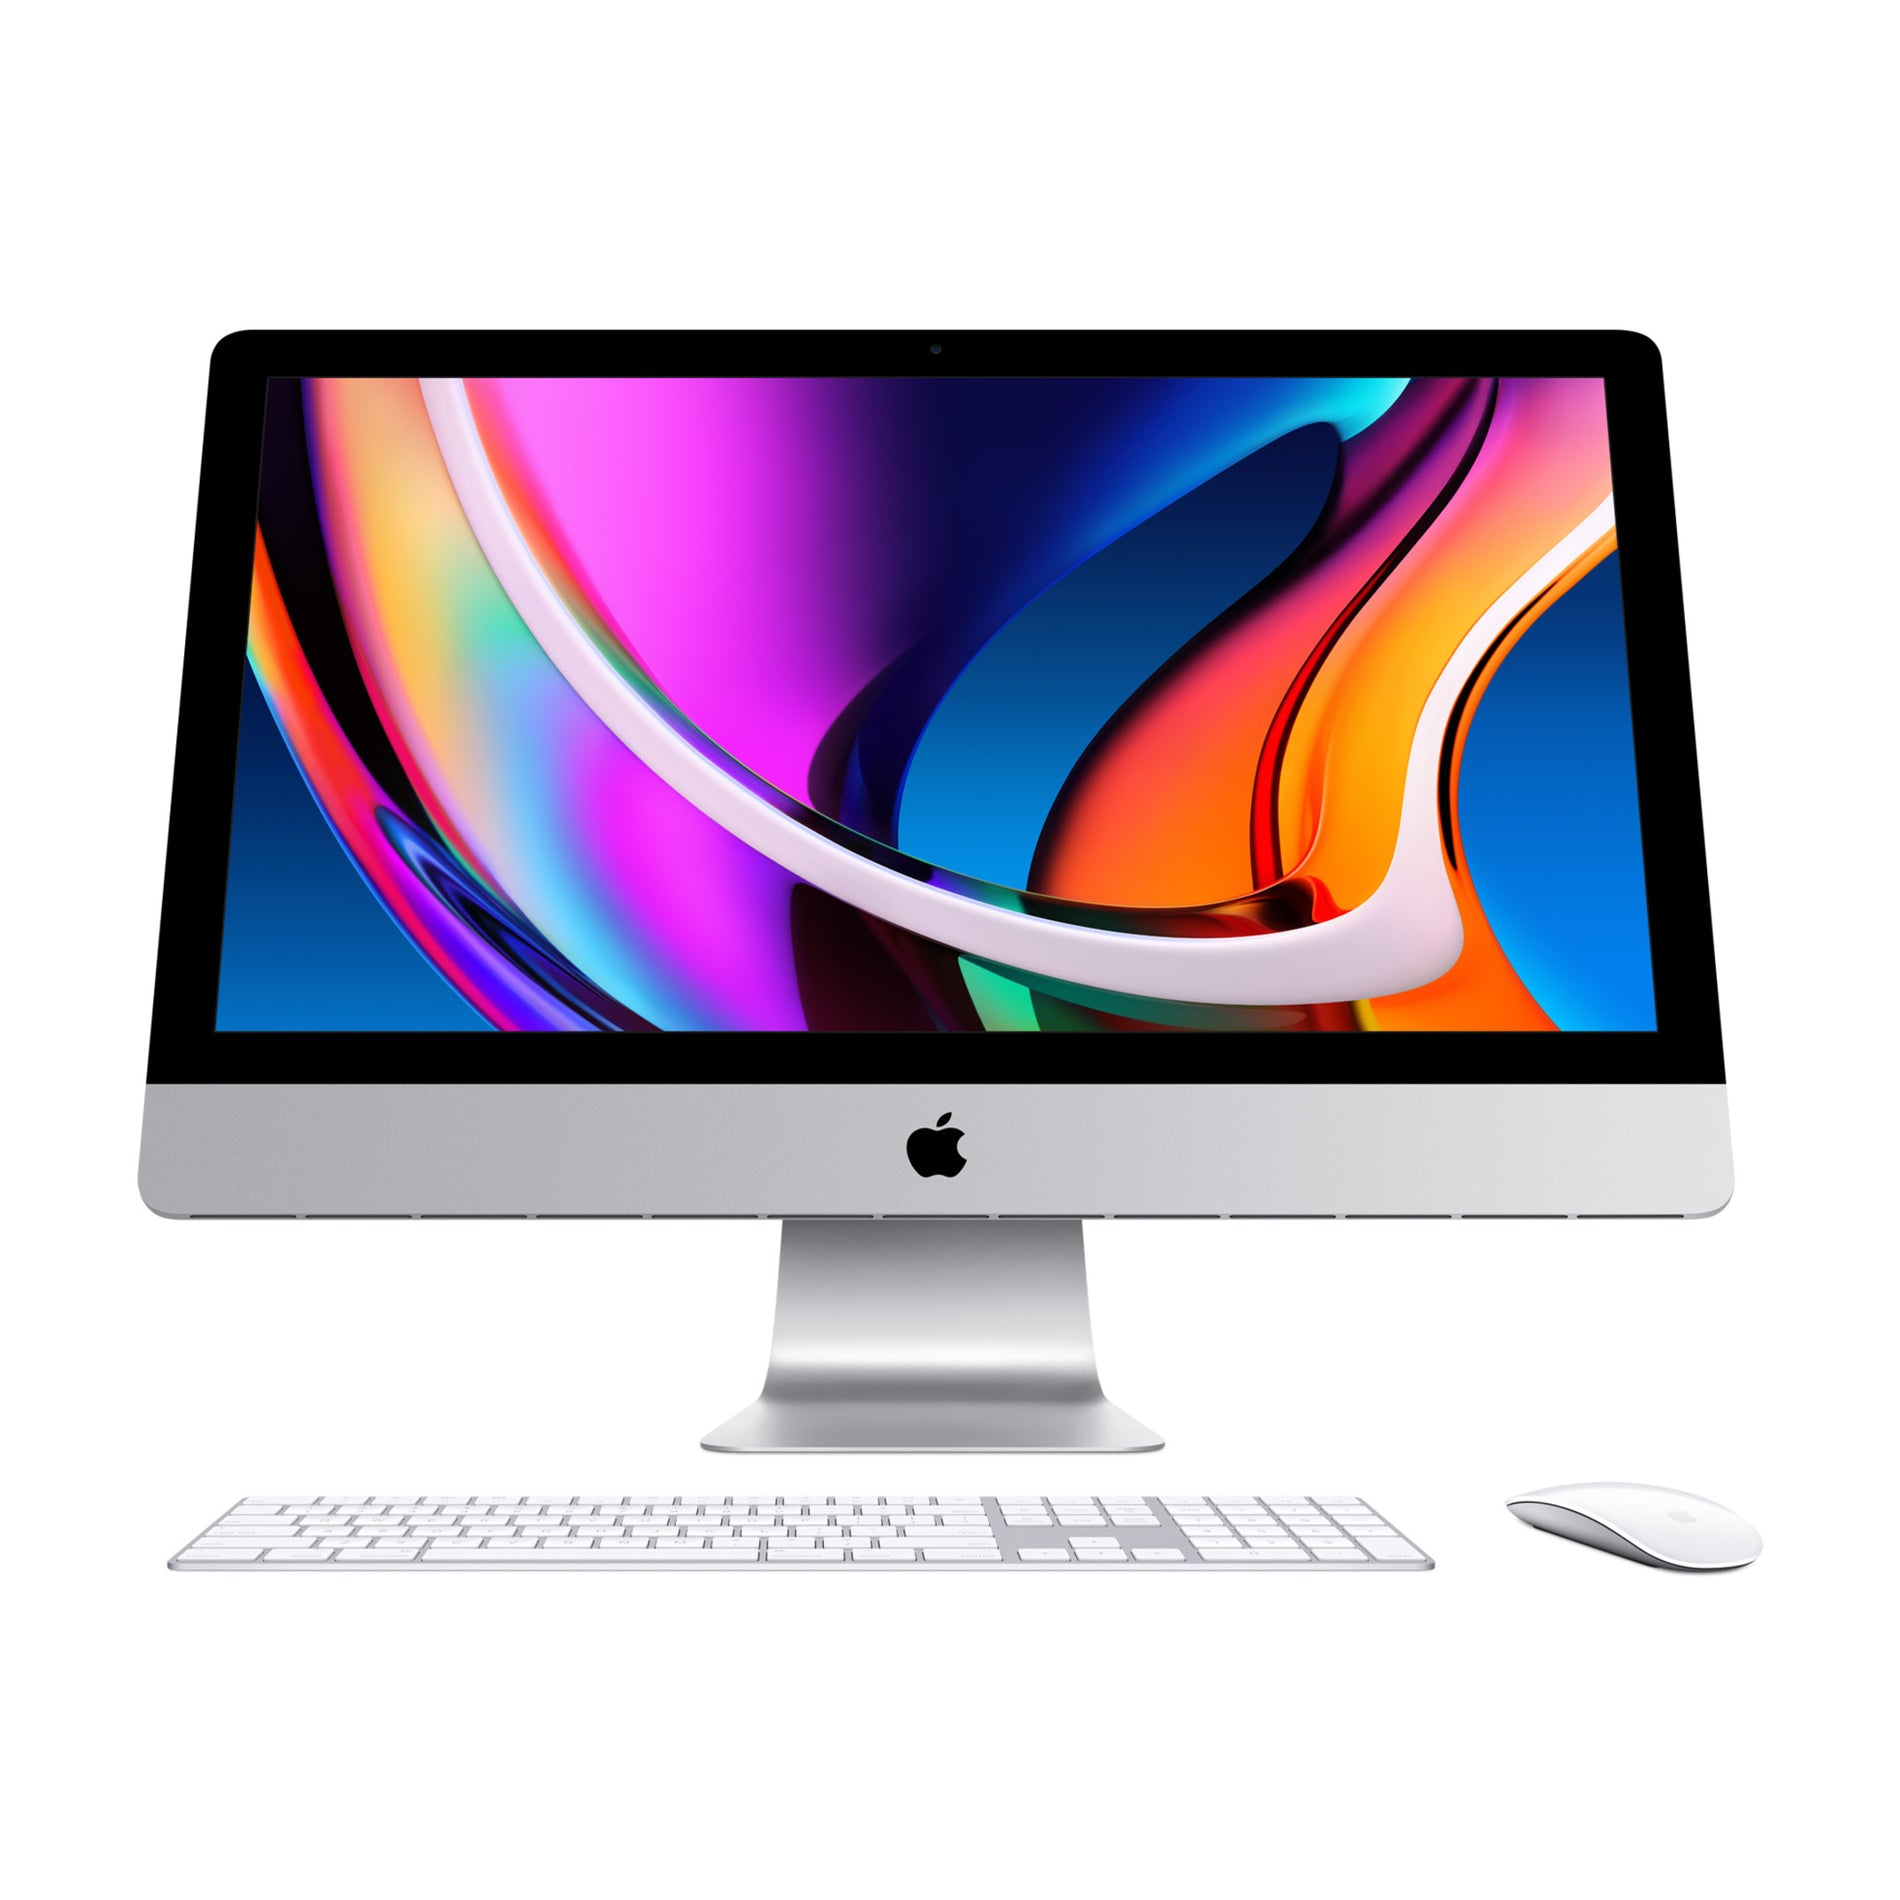 Apple MXWT2LL/A iMac 27in 3.1GHz 10th Gen i5, Retina 5K Display, 256GB - All-in-One Computer